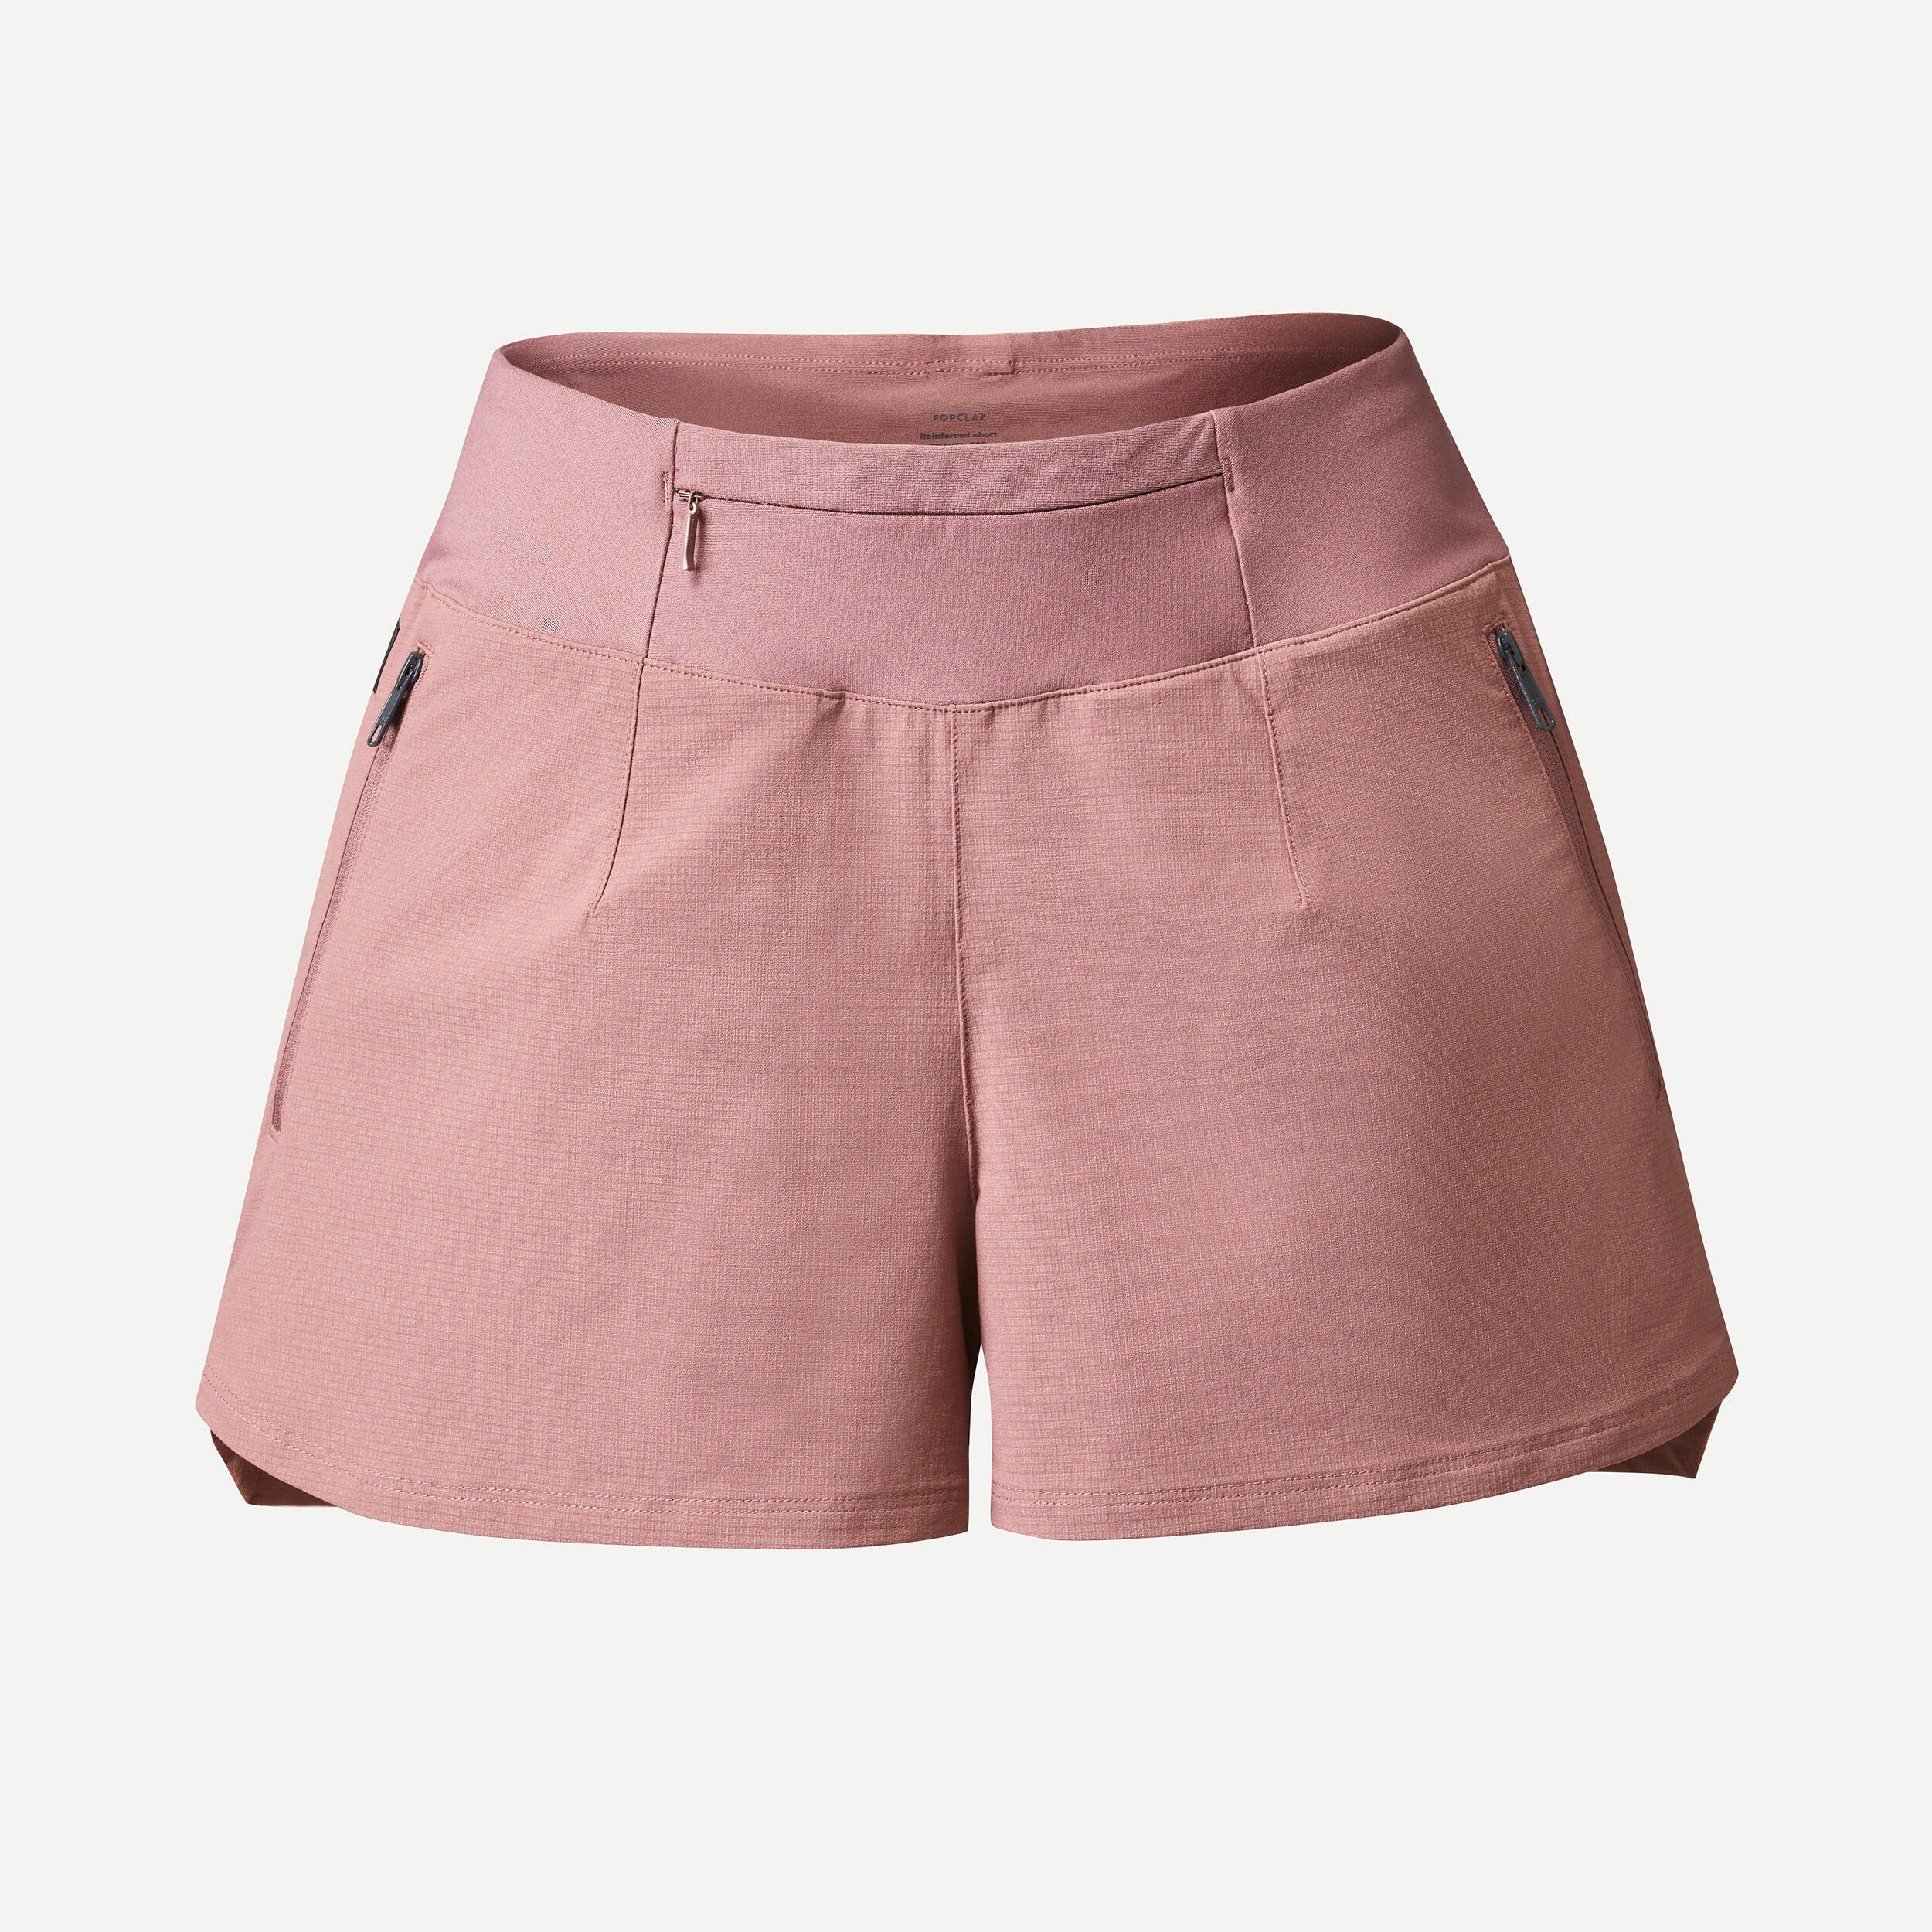 Women's Trekking Short Shorts-TRAVEL 900-Pink 6/7